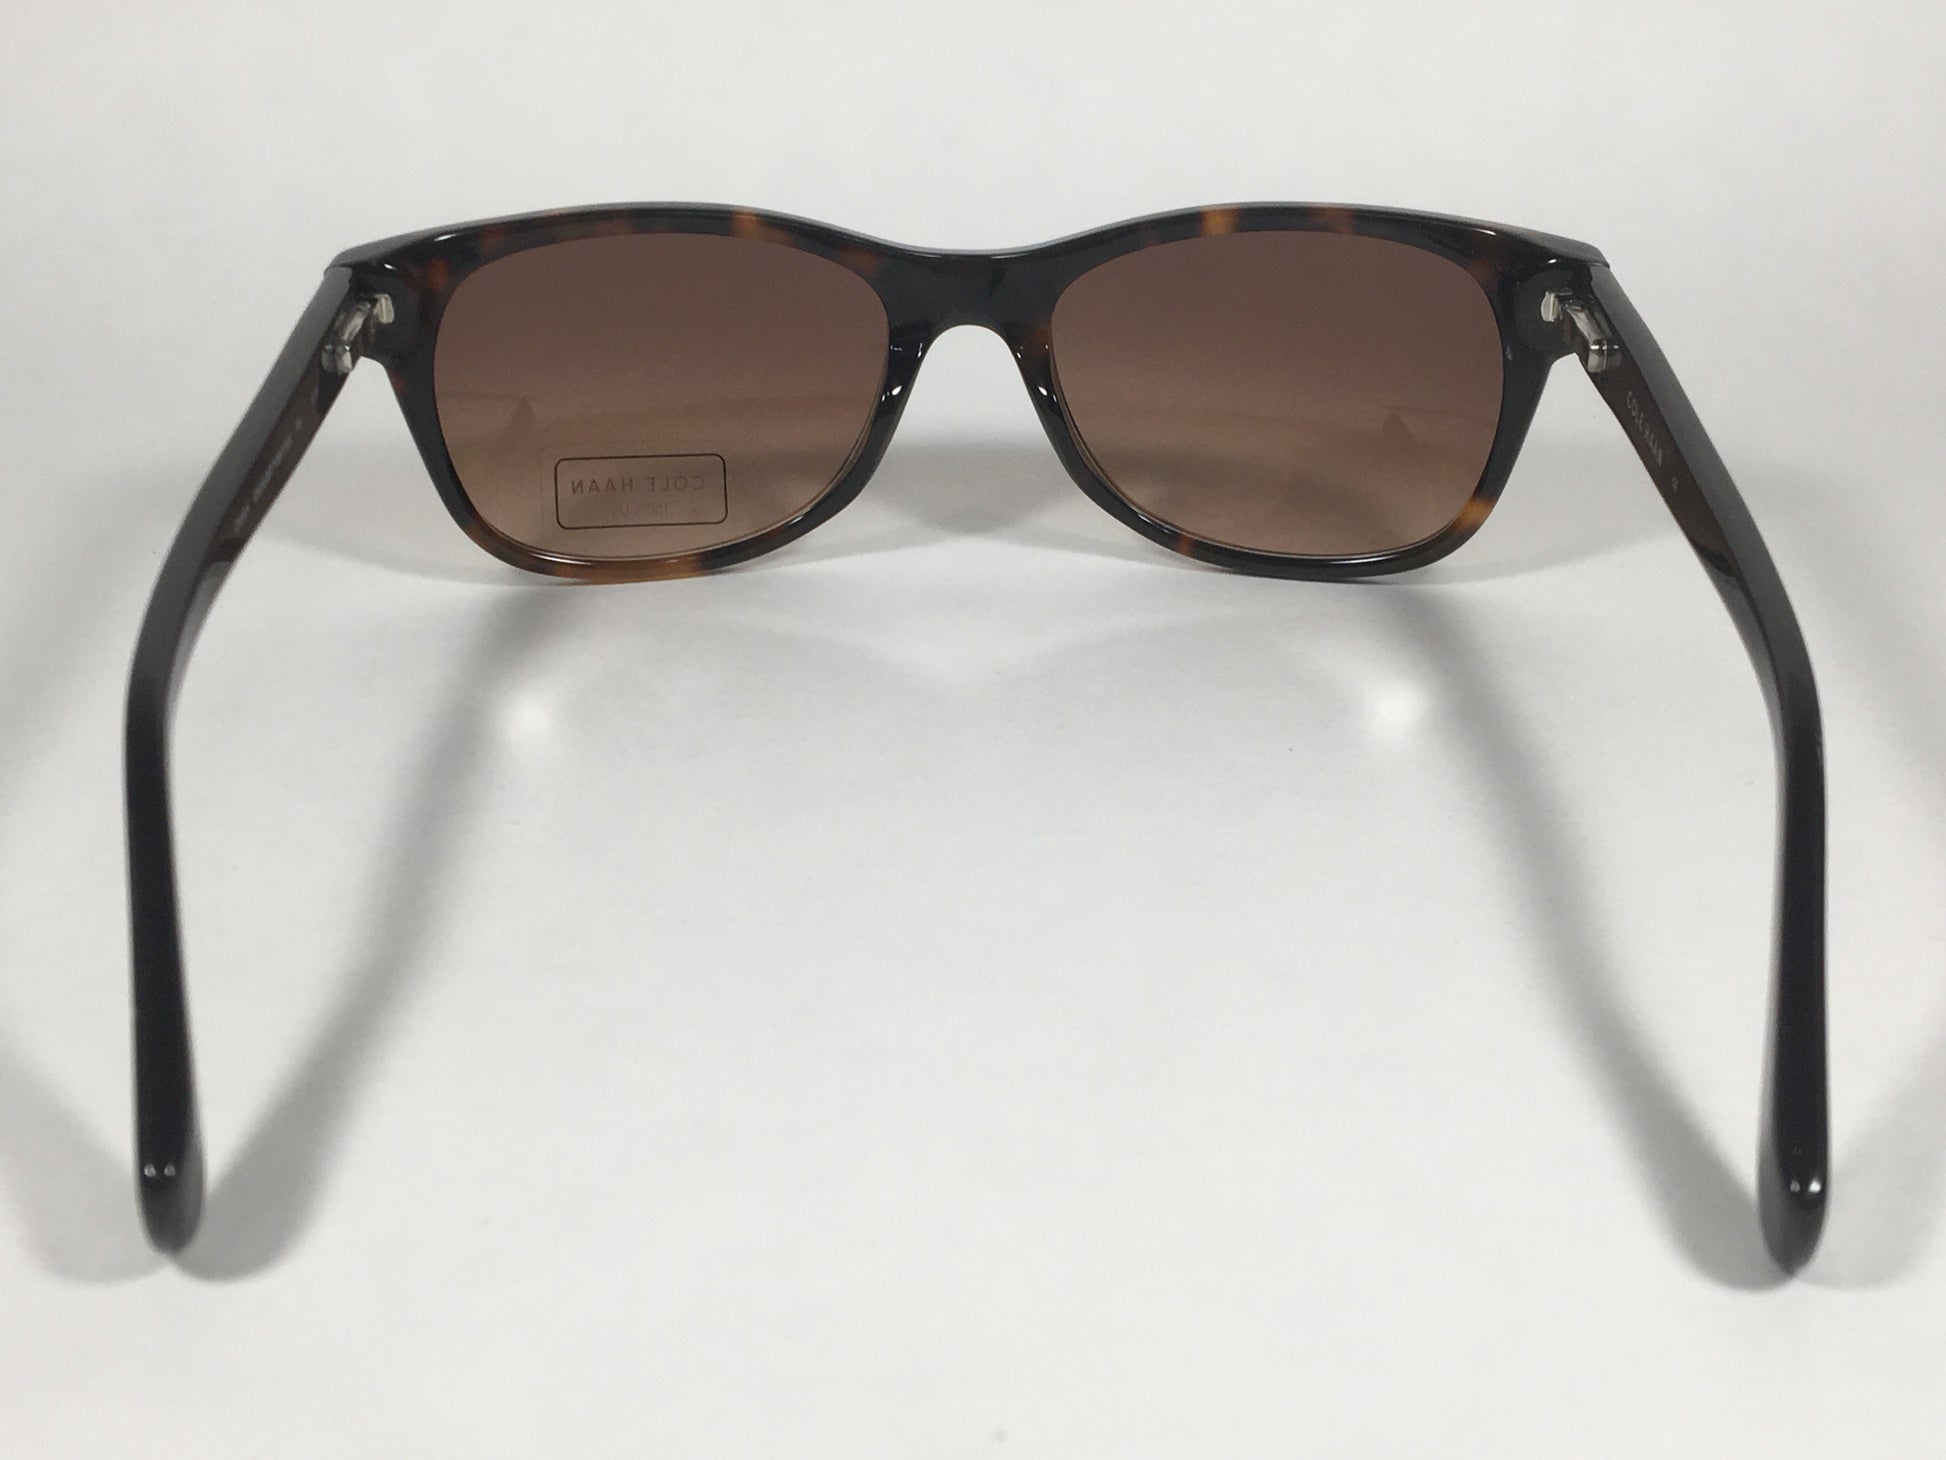 Cole Haan Designer Sunglasses Brown Tortoise Brown Gradient Lens CH7011 240 SOFT TORTOISE - Sunglasses